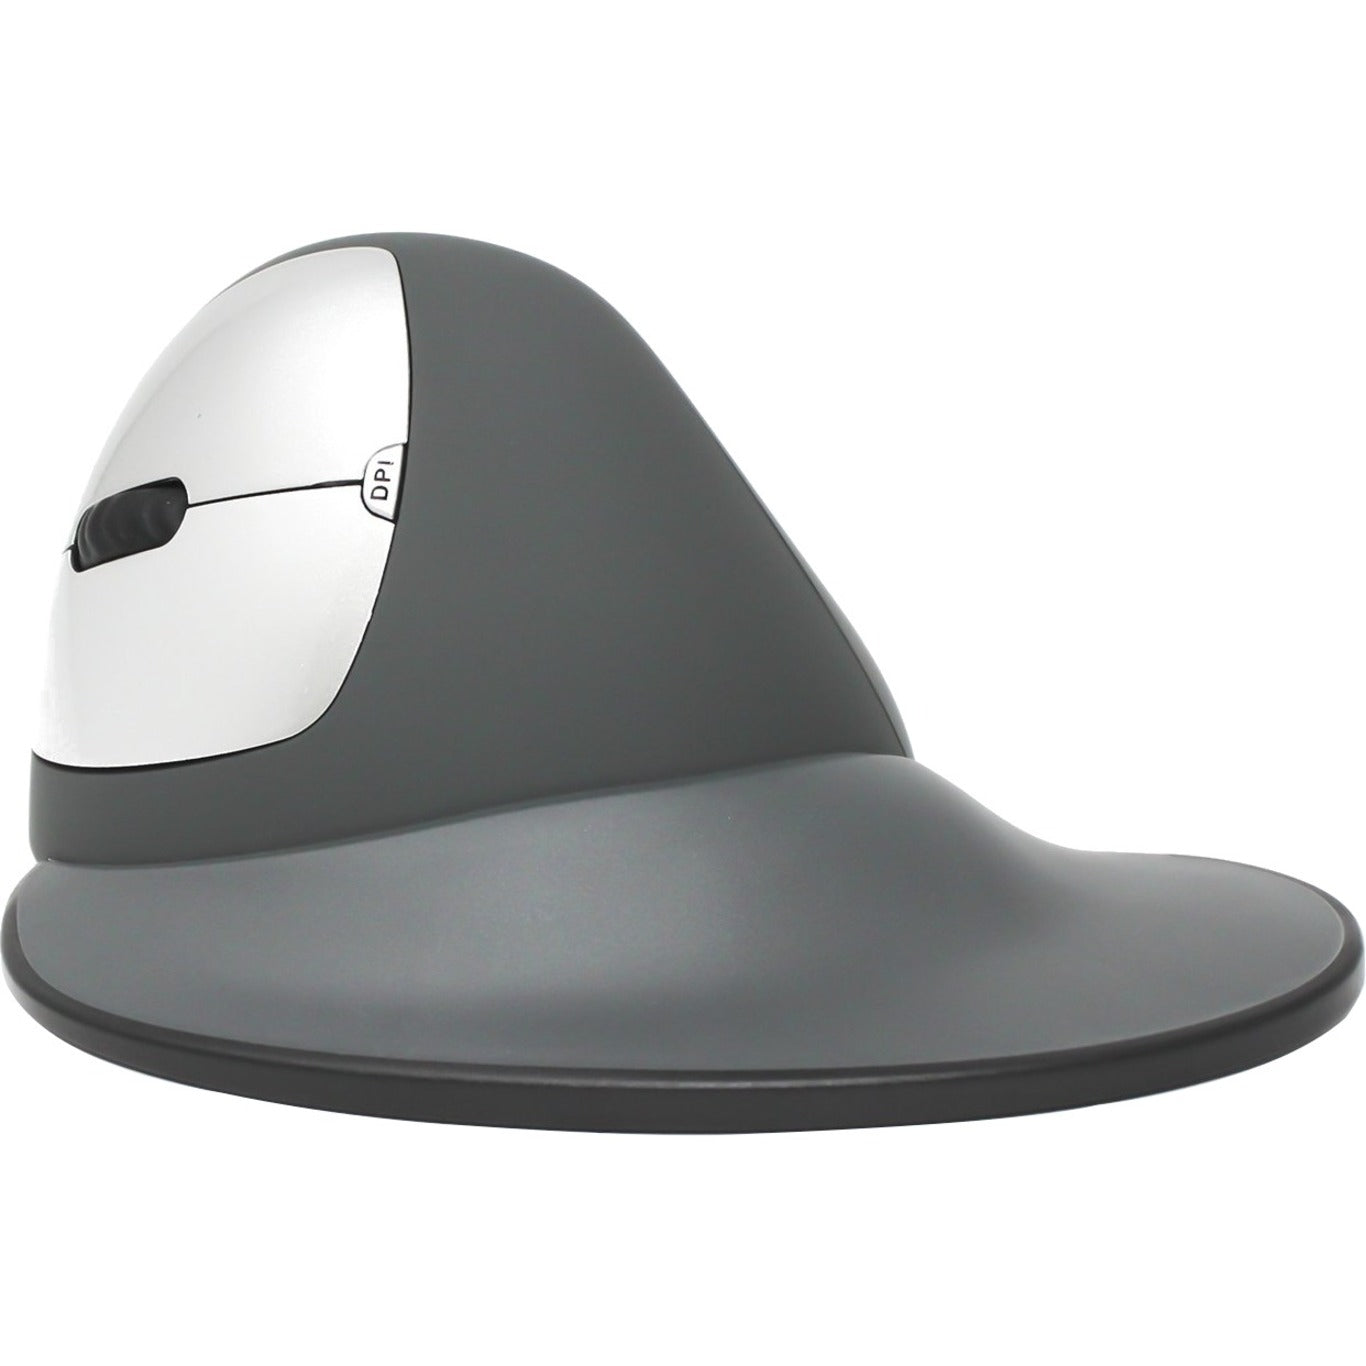 Goldtouch KOV-GSV-LMW Mouse, Left-handed Wireless Ergonomic Fit, 1600 dpi, Medium Size